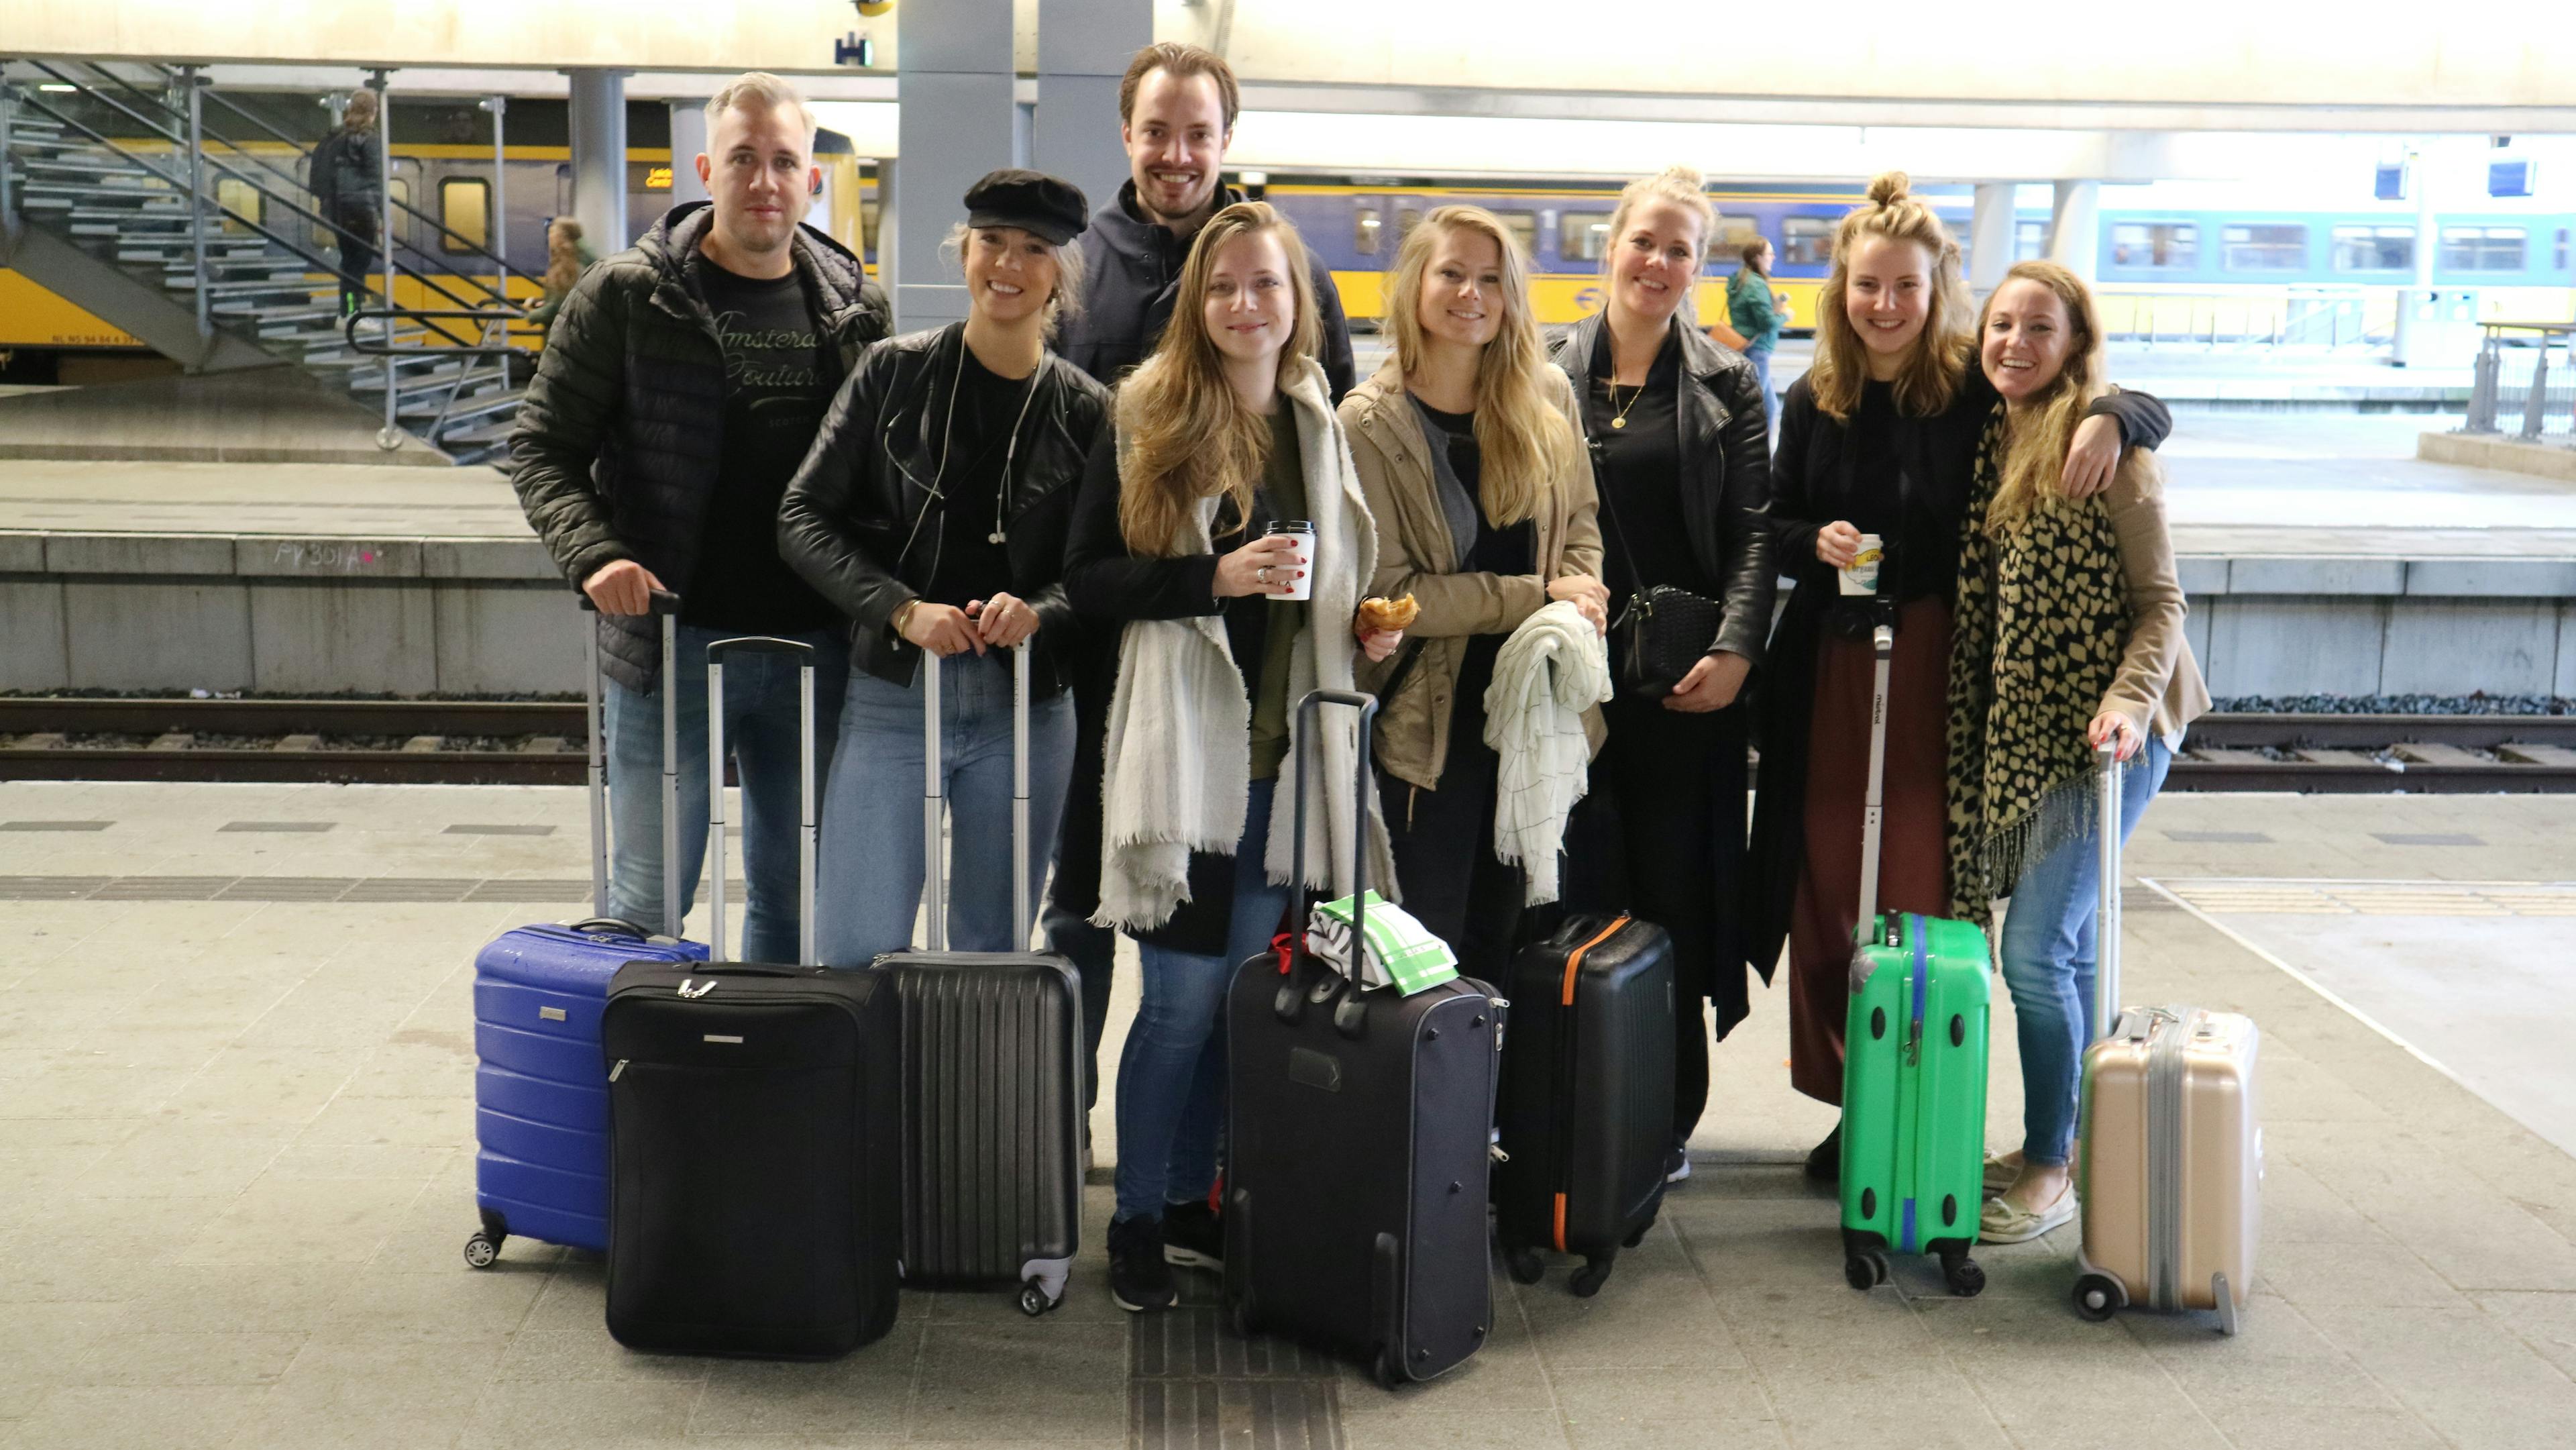 8 mensen van Sprekershuys op utrecht centraal met koffers glimlachend